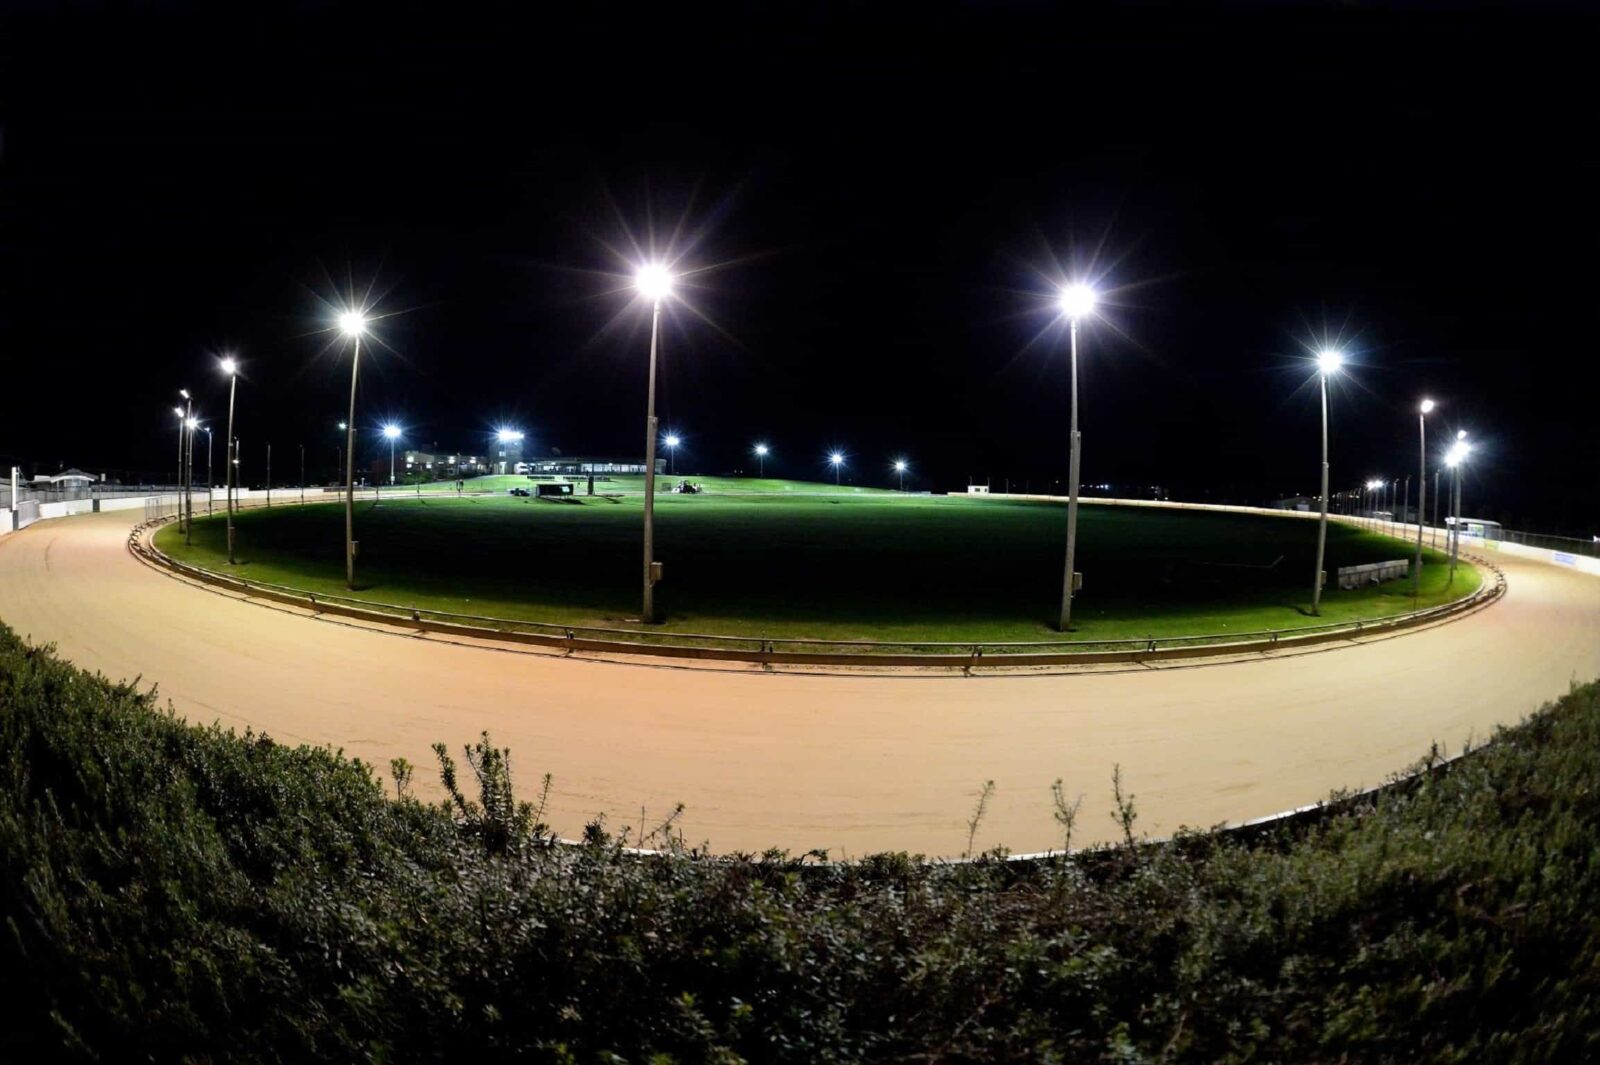 Warrnambool Greyhounds - Racing under lights every Thursday